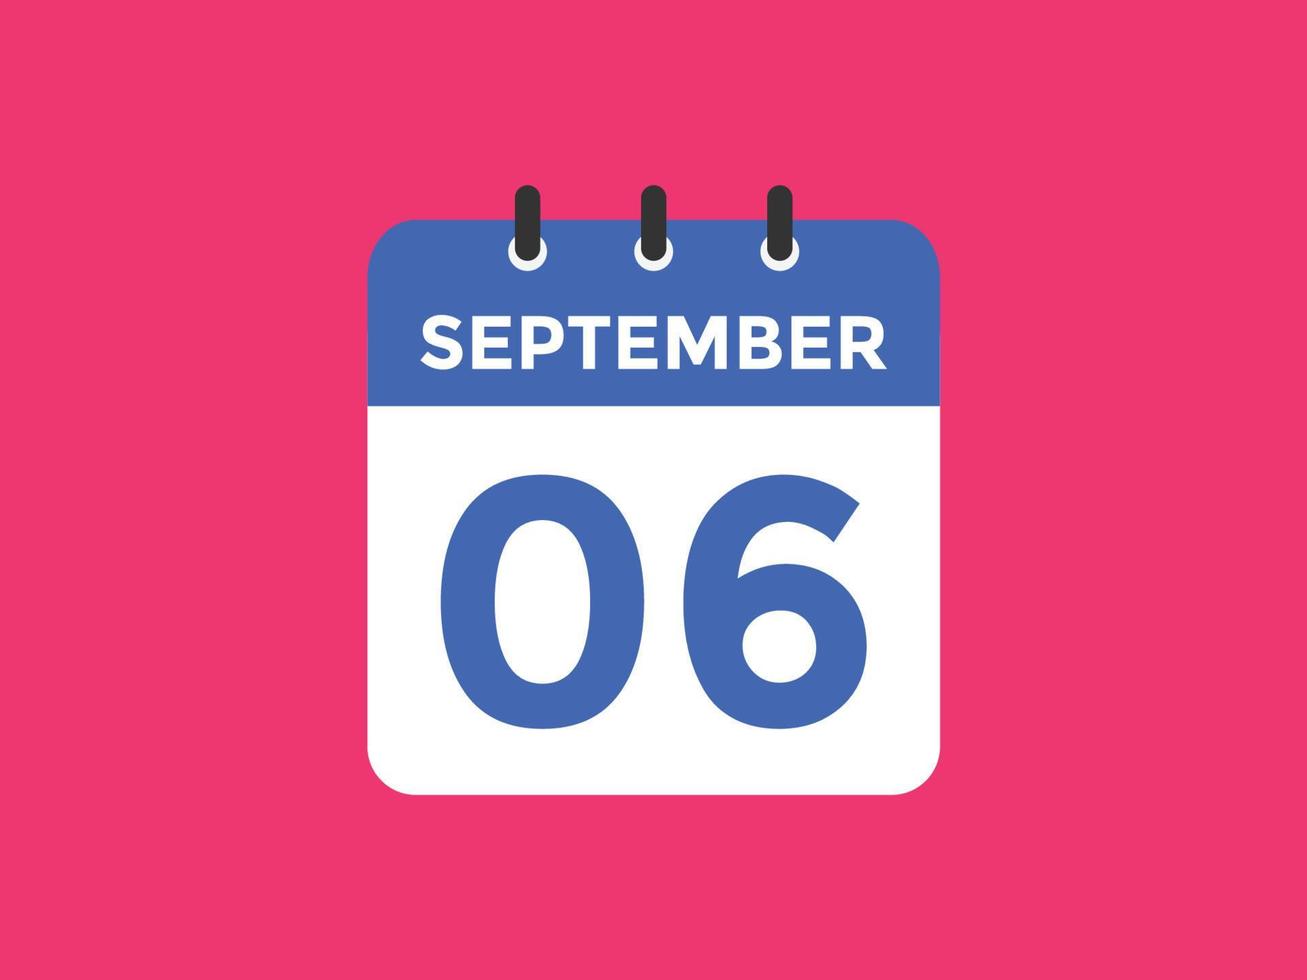 september 6 calendar reminder. 6th september daily calendar icon template. Calendar 6th september icon Design template. Vector illustration